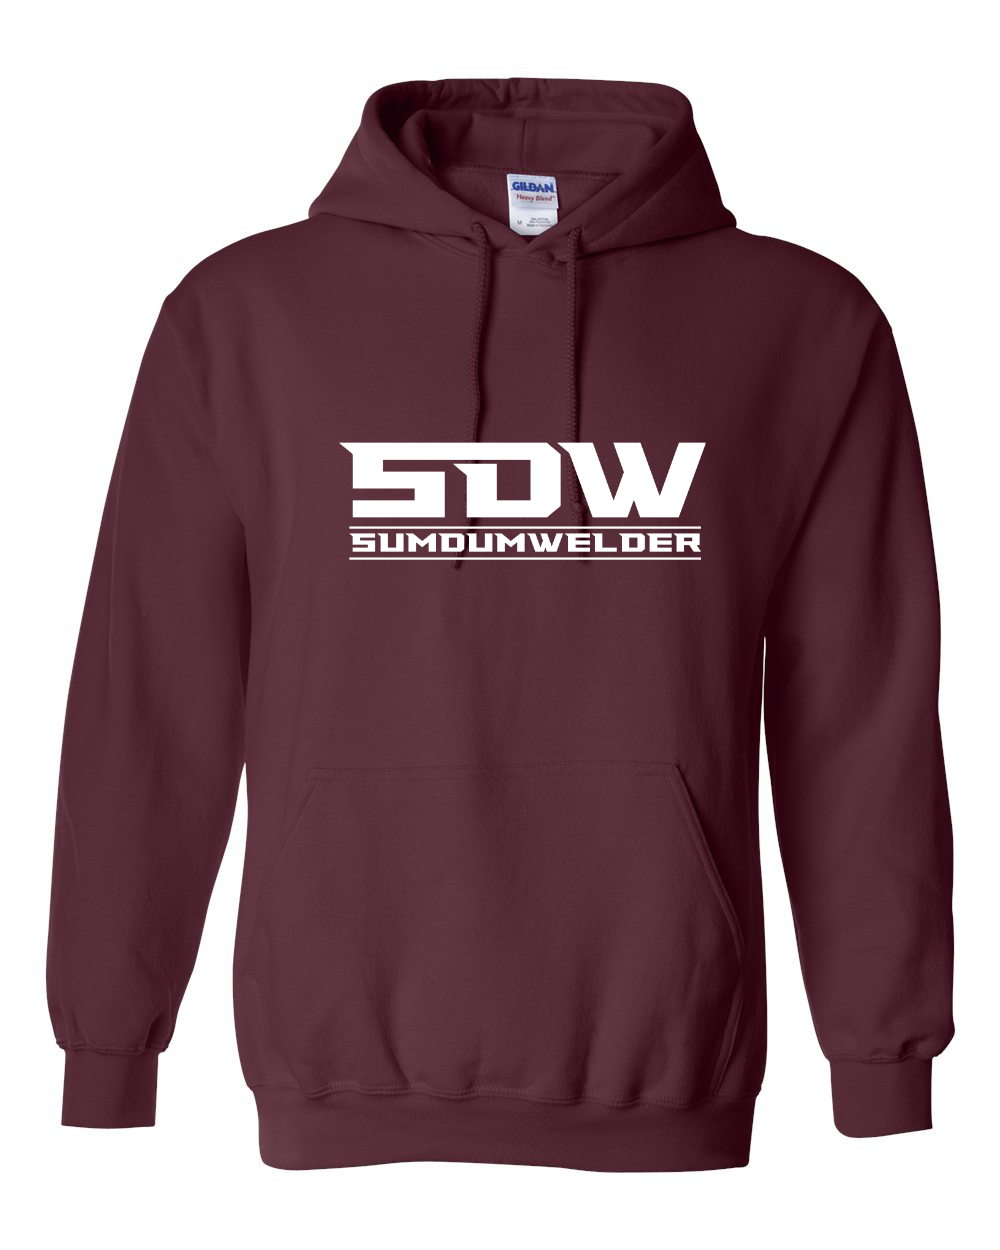 Weld Money - SDW - White Print